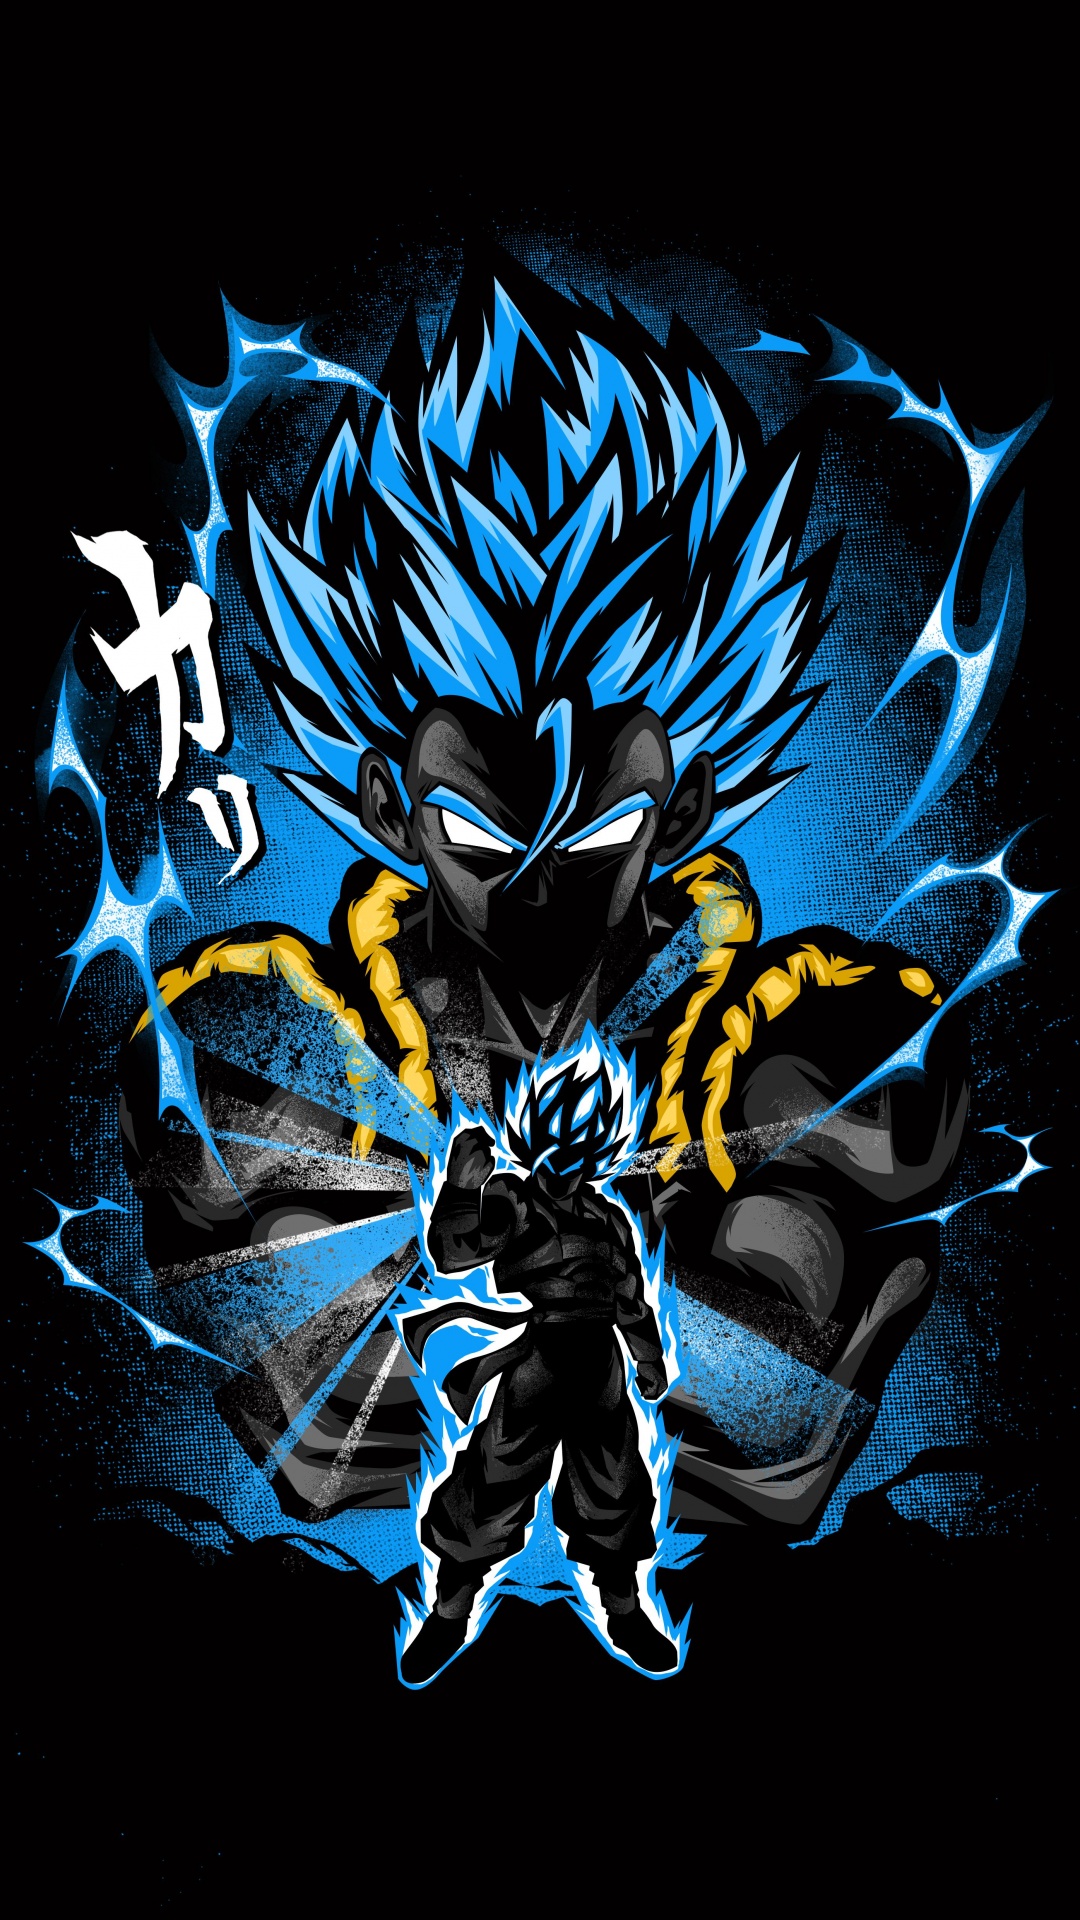 Goku 4K Wallpaper, Fusion attack, Dragon Ball Z, Anime series, Black